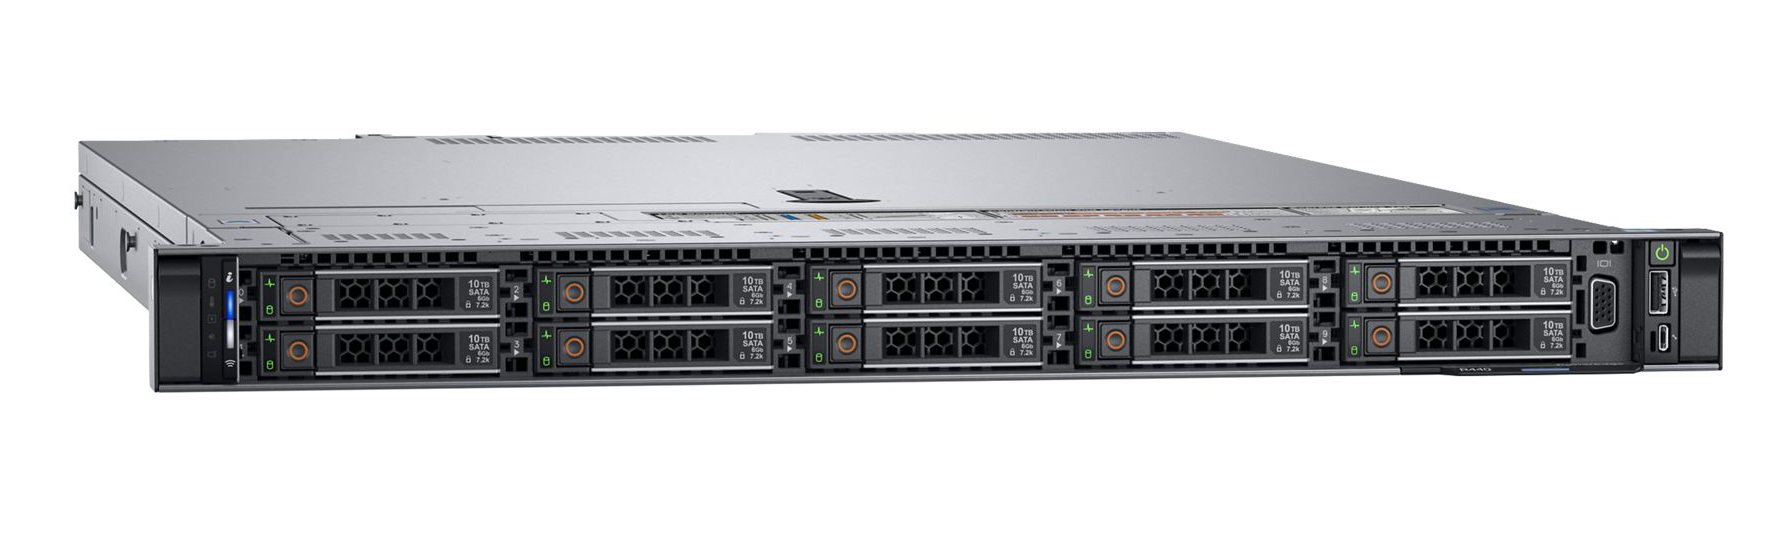 Dell PowerEdge R440 Server - Specs & Info | Mojo Systems